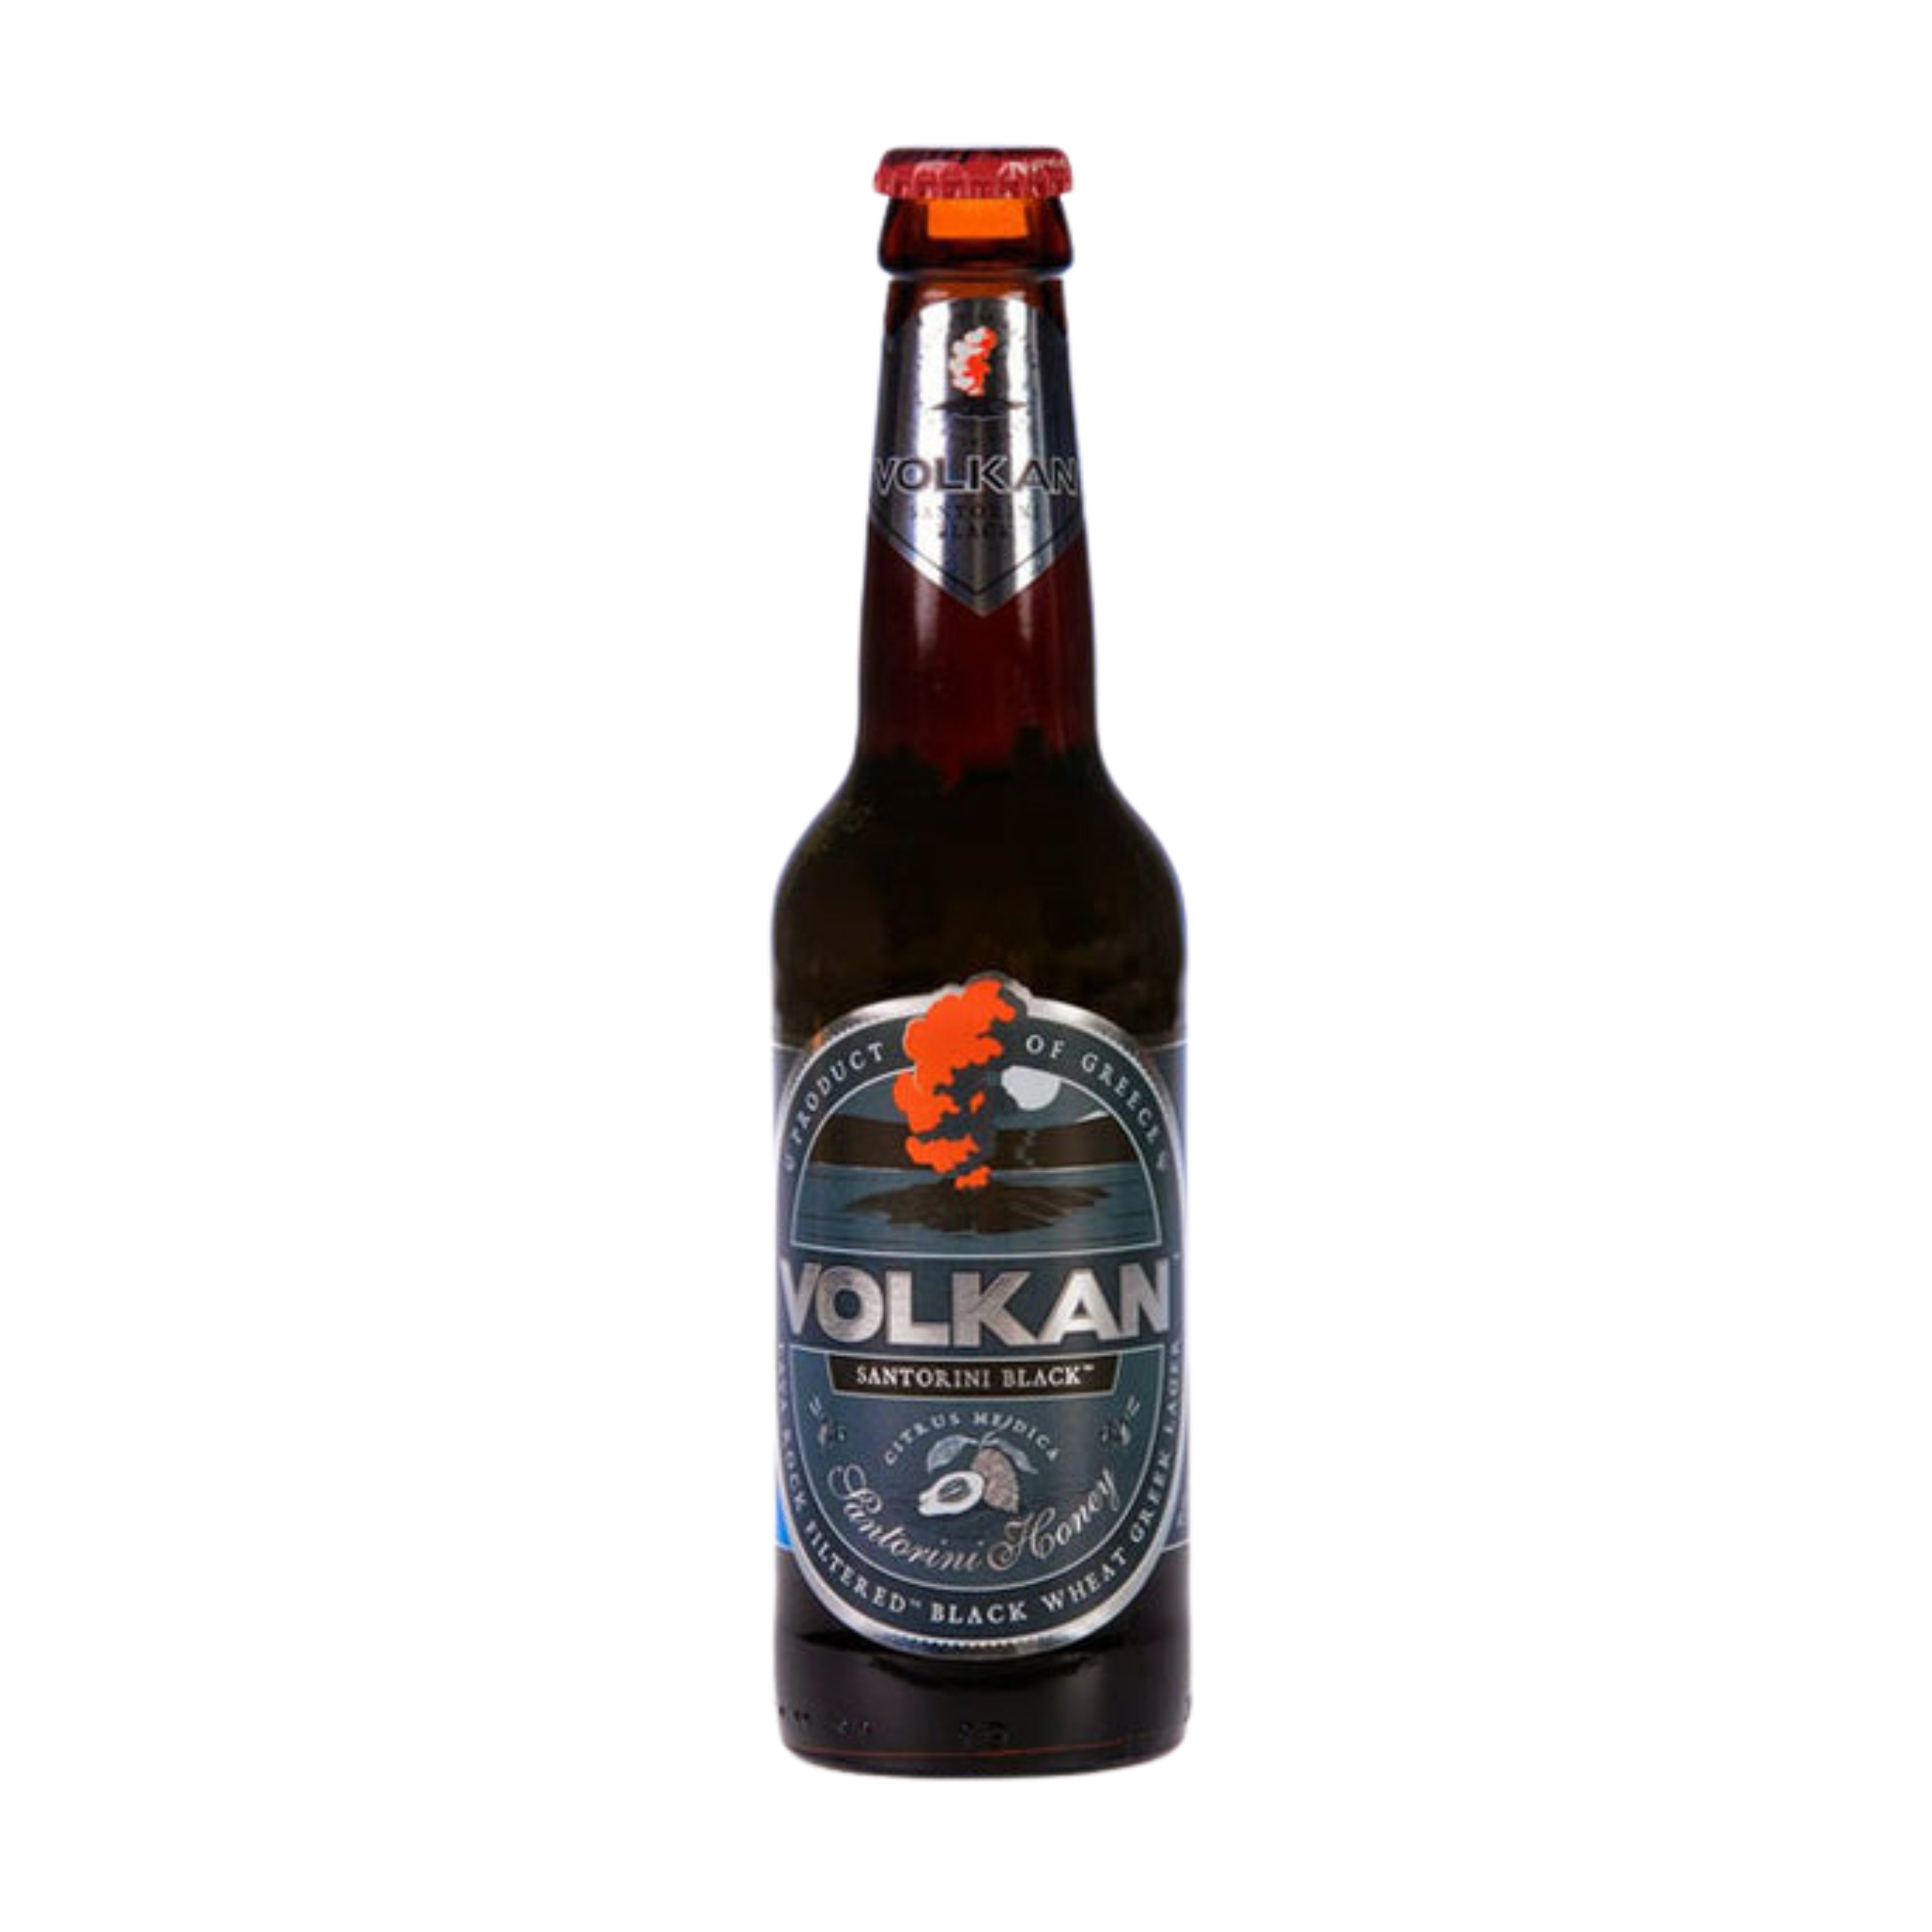 Volkan Santorini black beer - 330ml